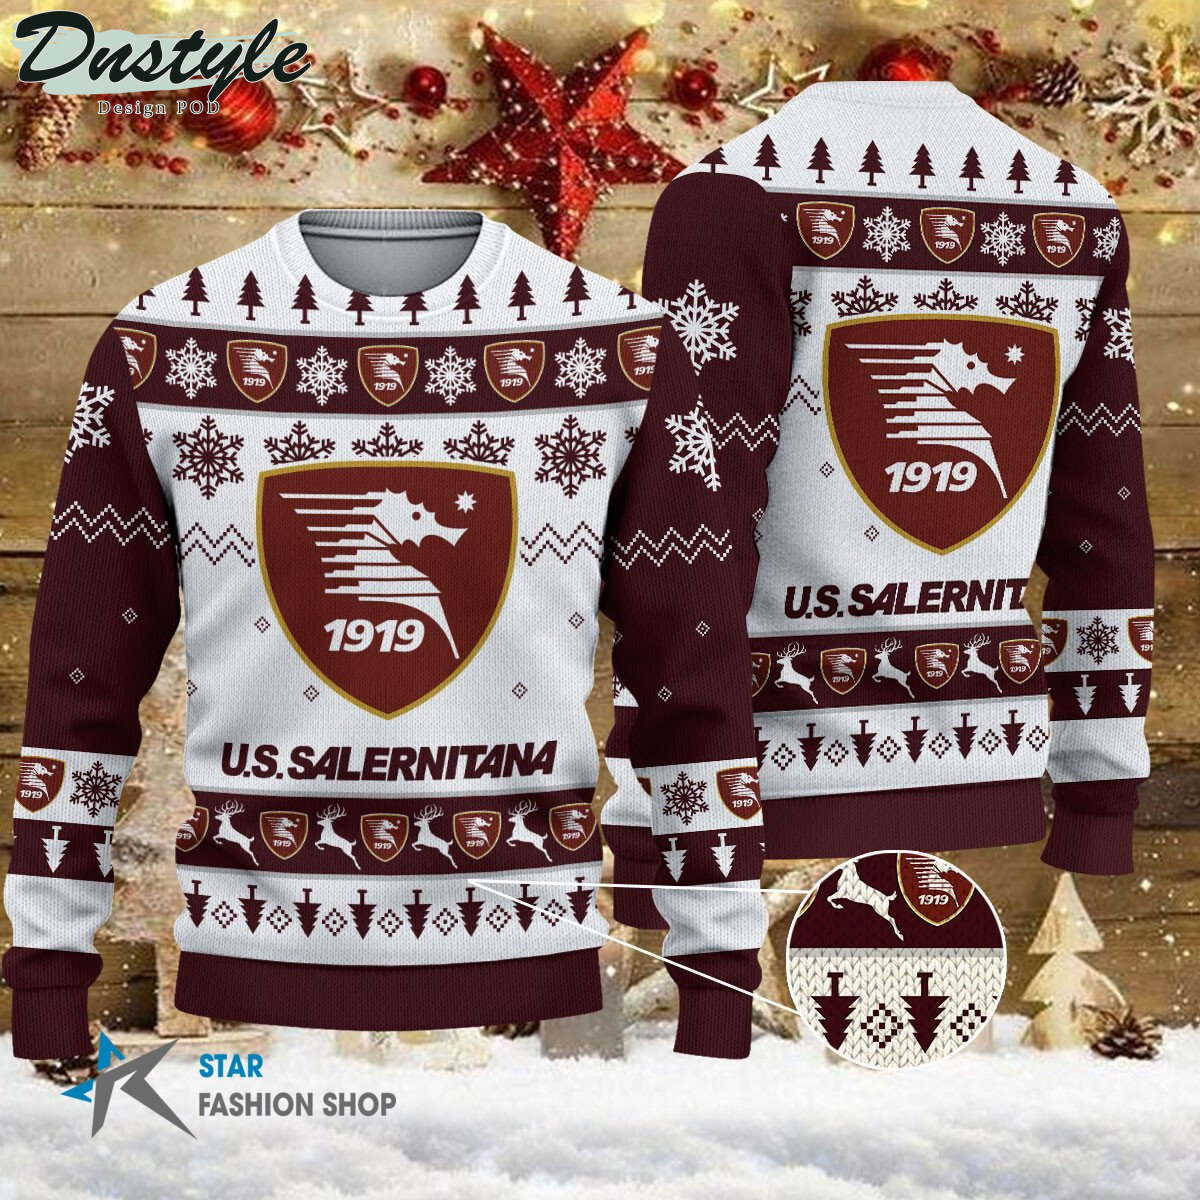 U.S. Salernitana 1919 ugly christmas sweater